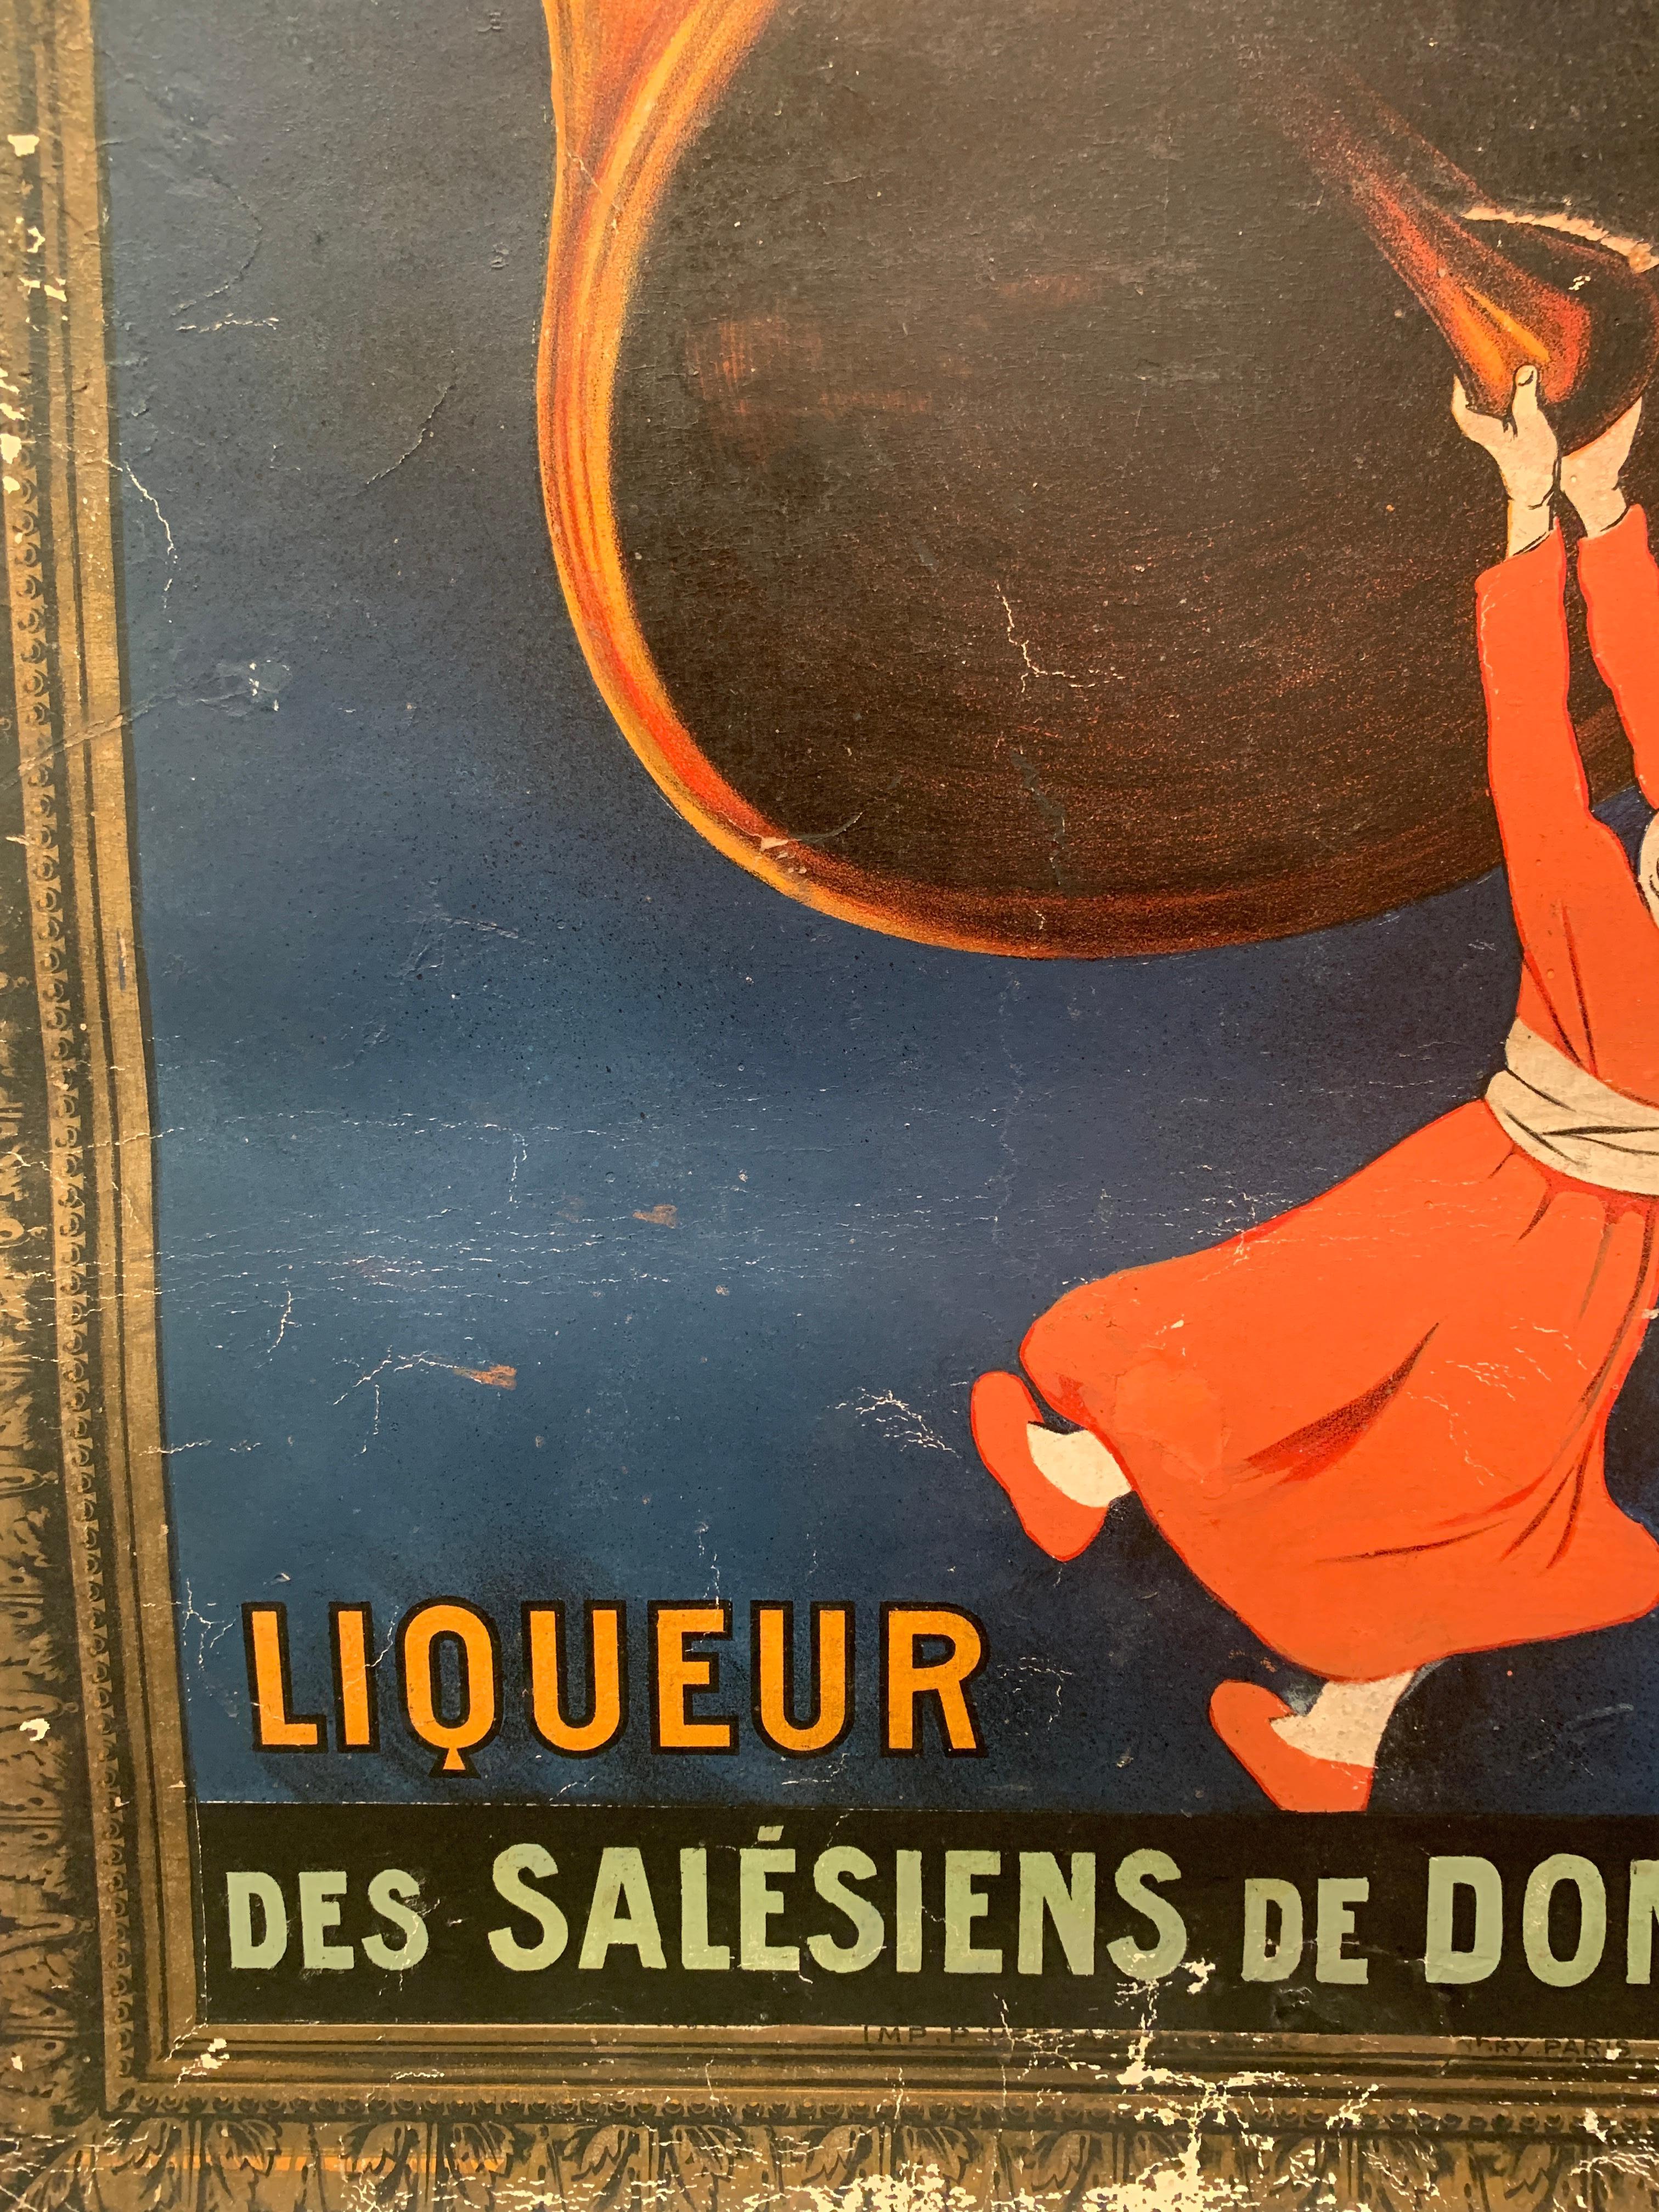 Original Antique French Poster, 